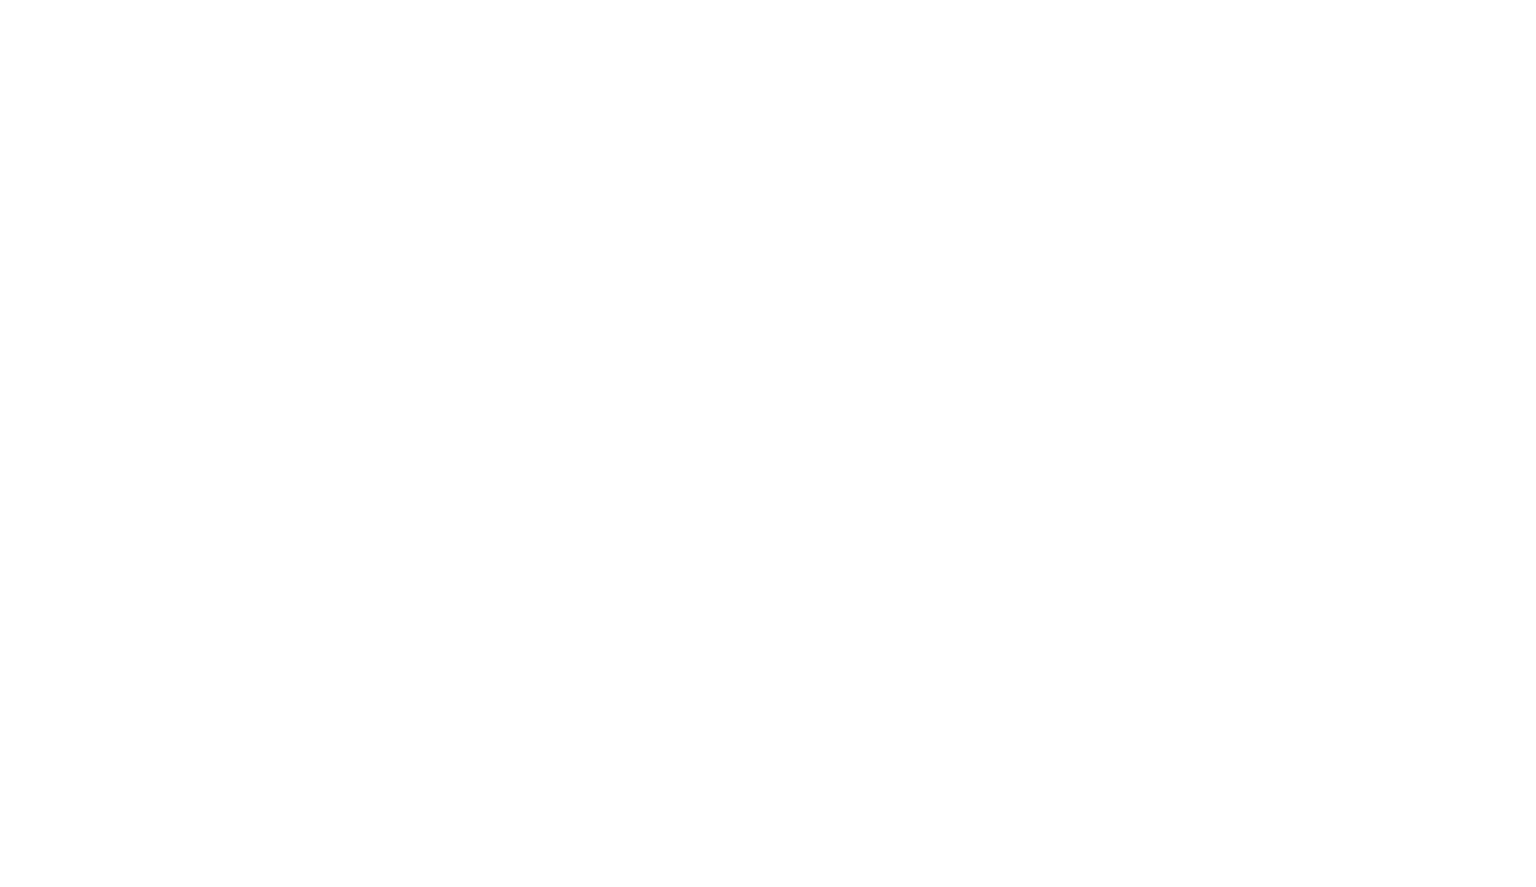 S. L. Nusbaum Realty Co. logo